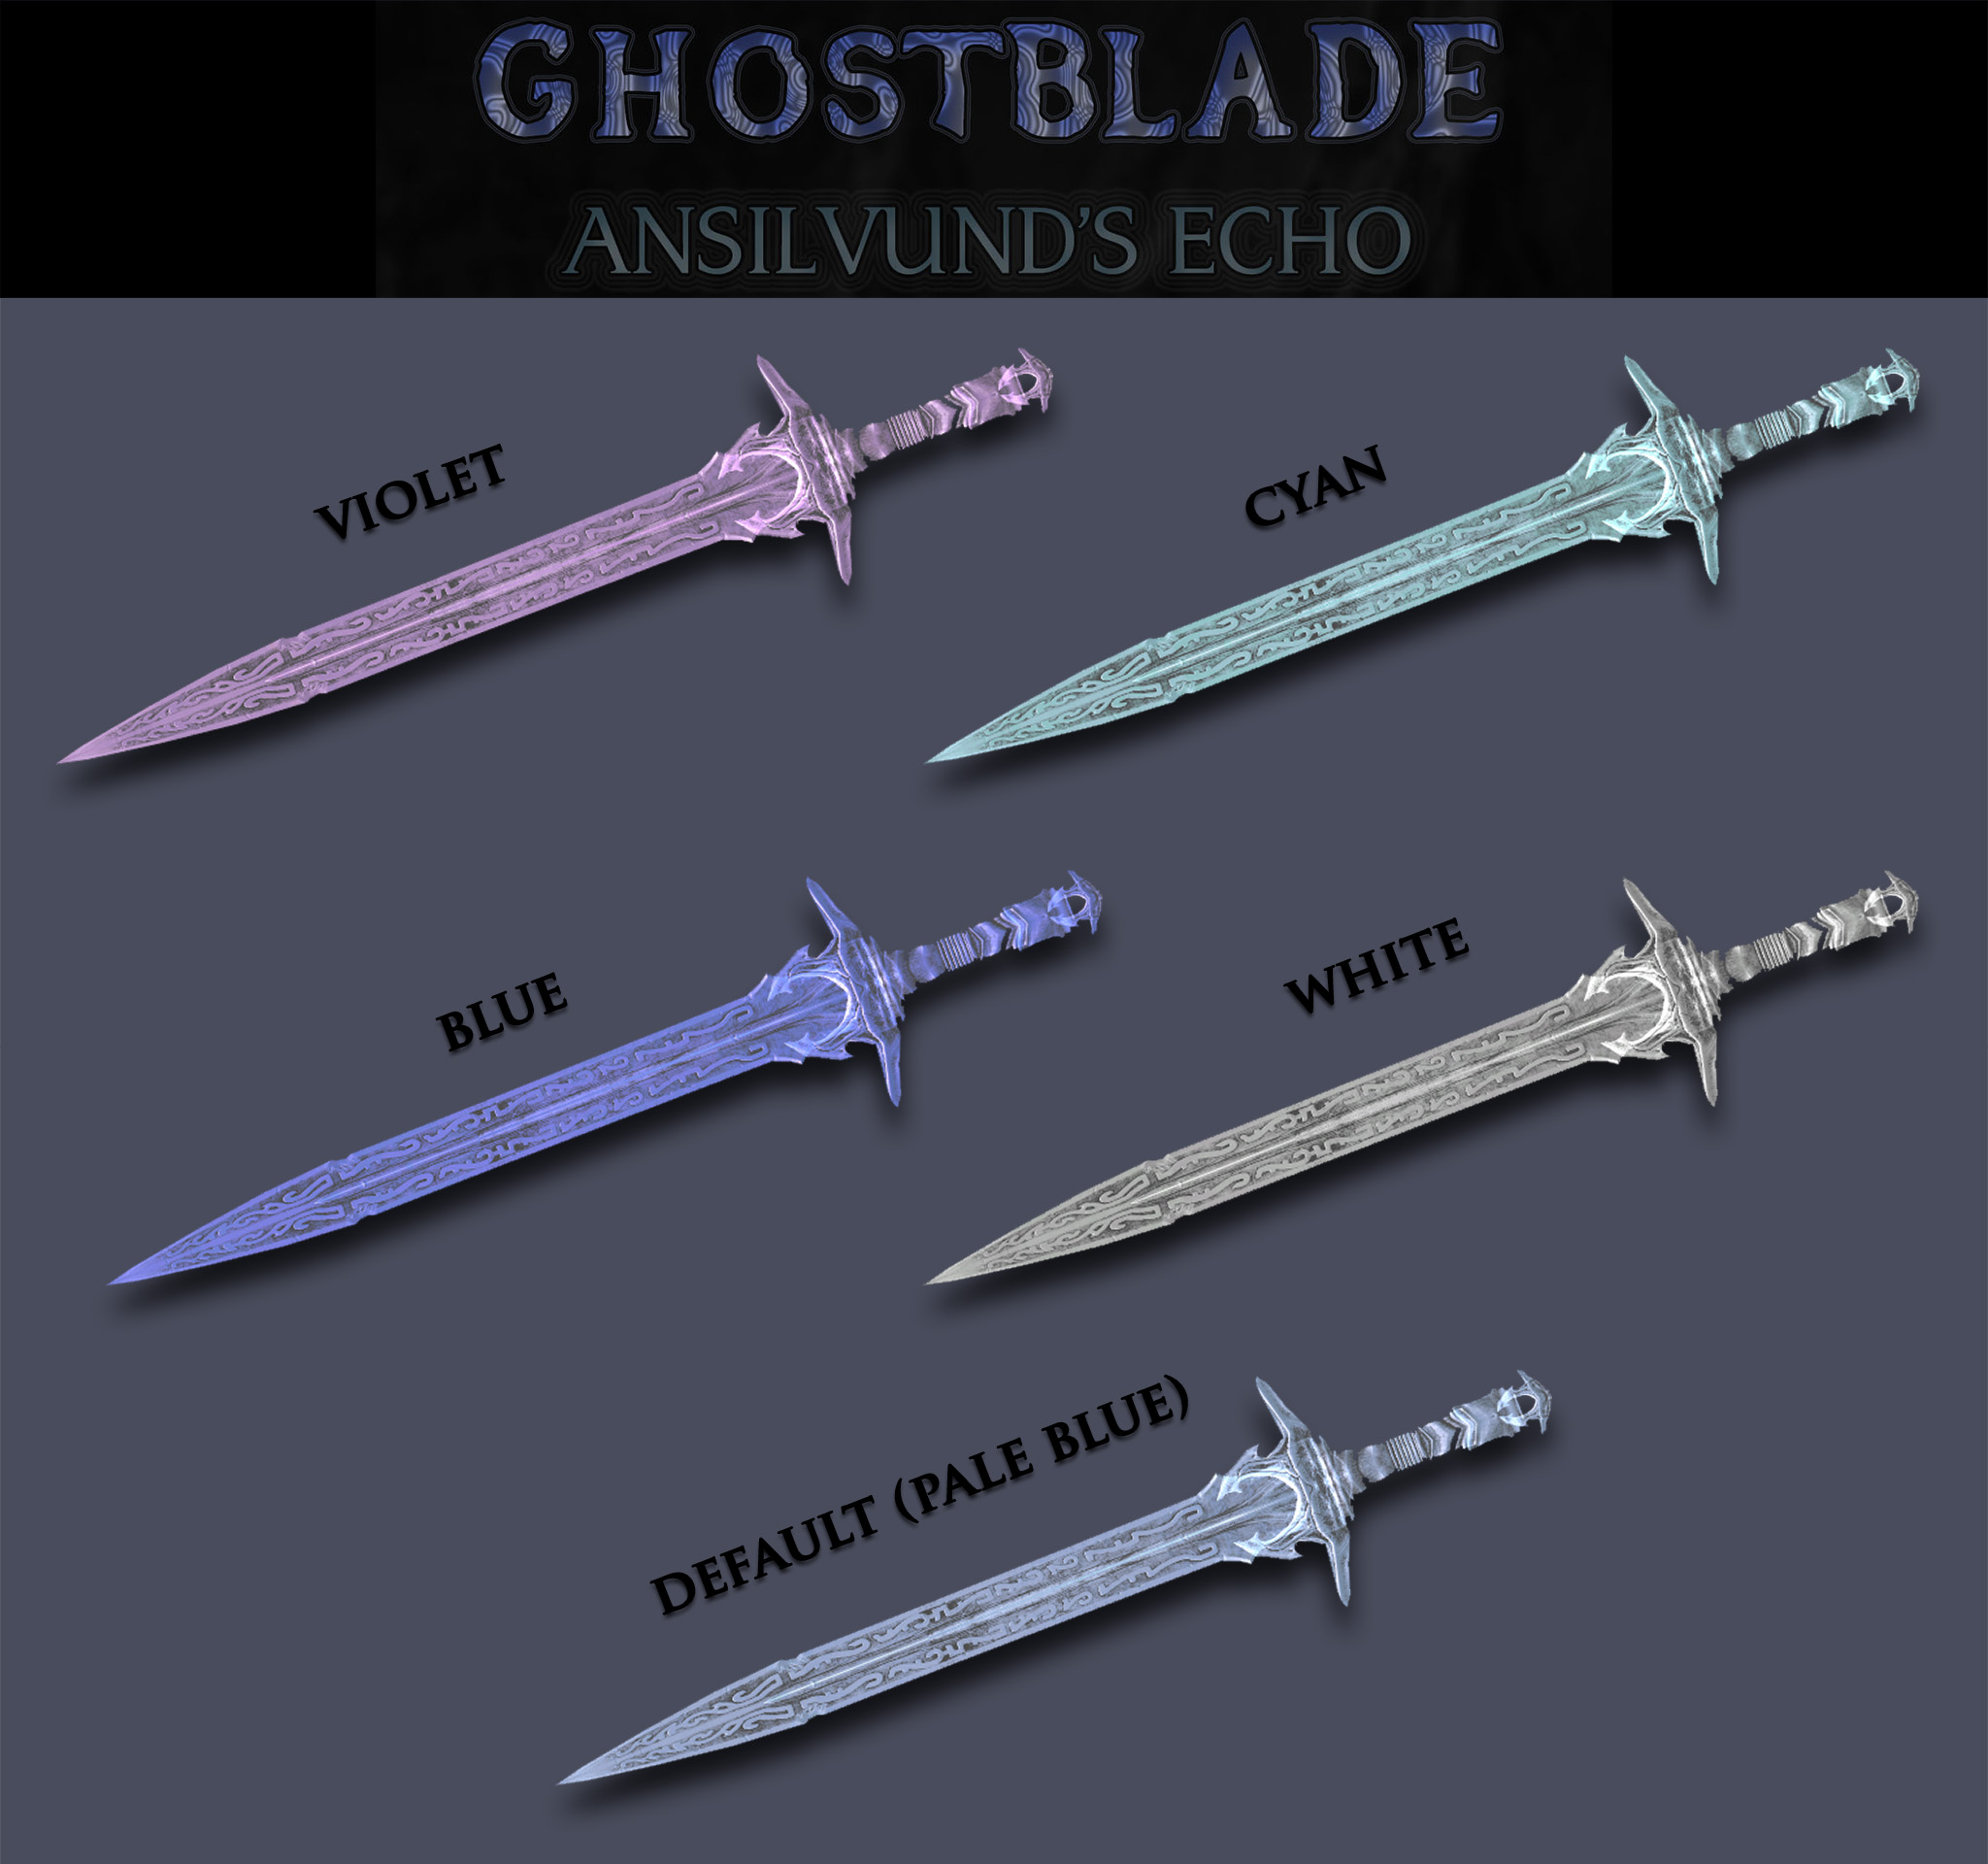 Ghostblade Ansilvund S Echo 武器 Skyrim Mod データベース Mod紹介 まとめサイト